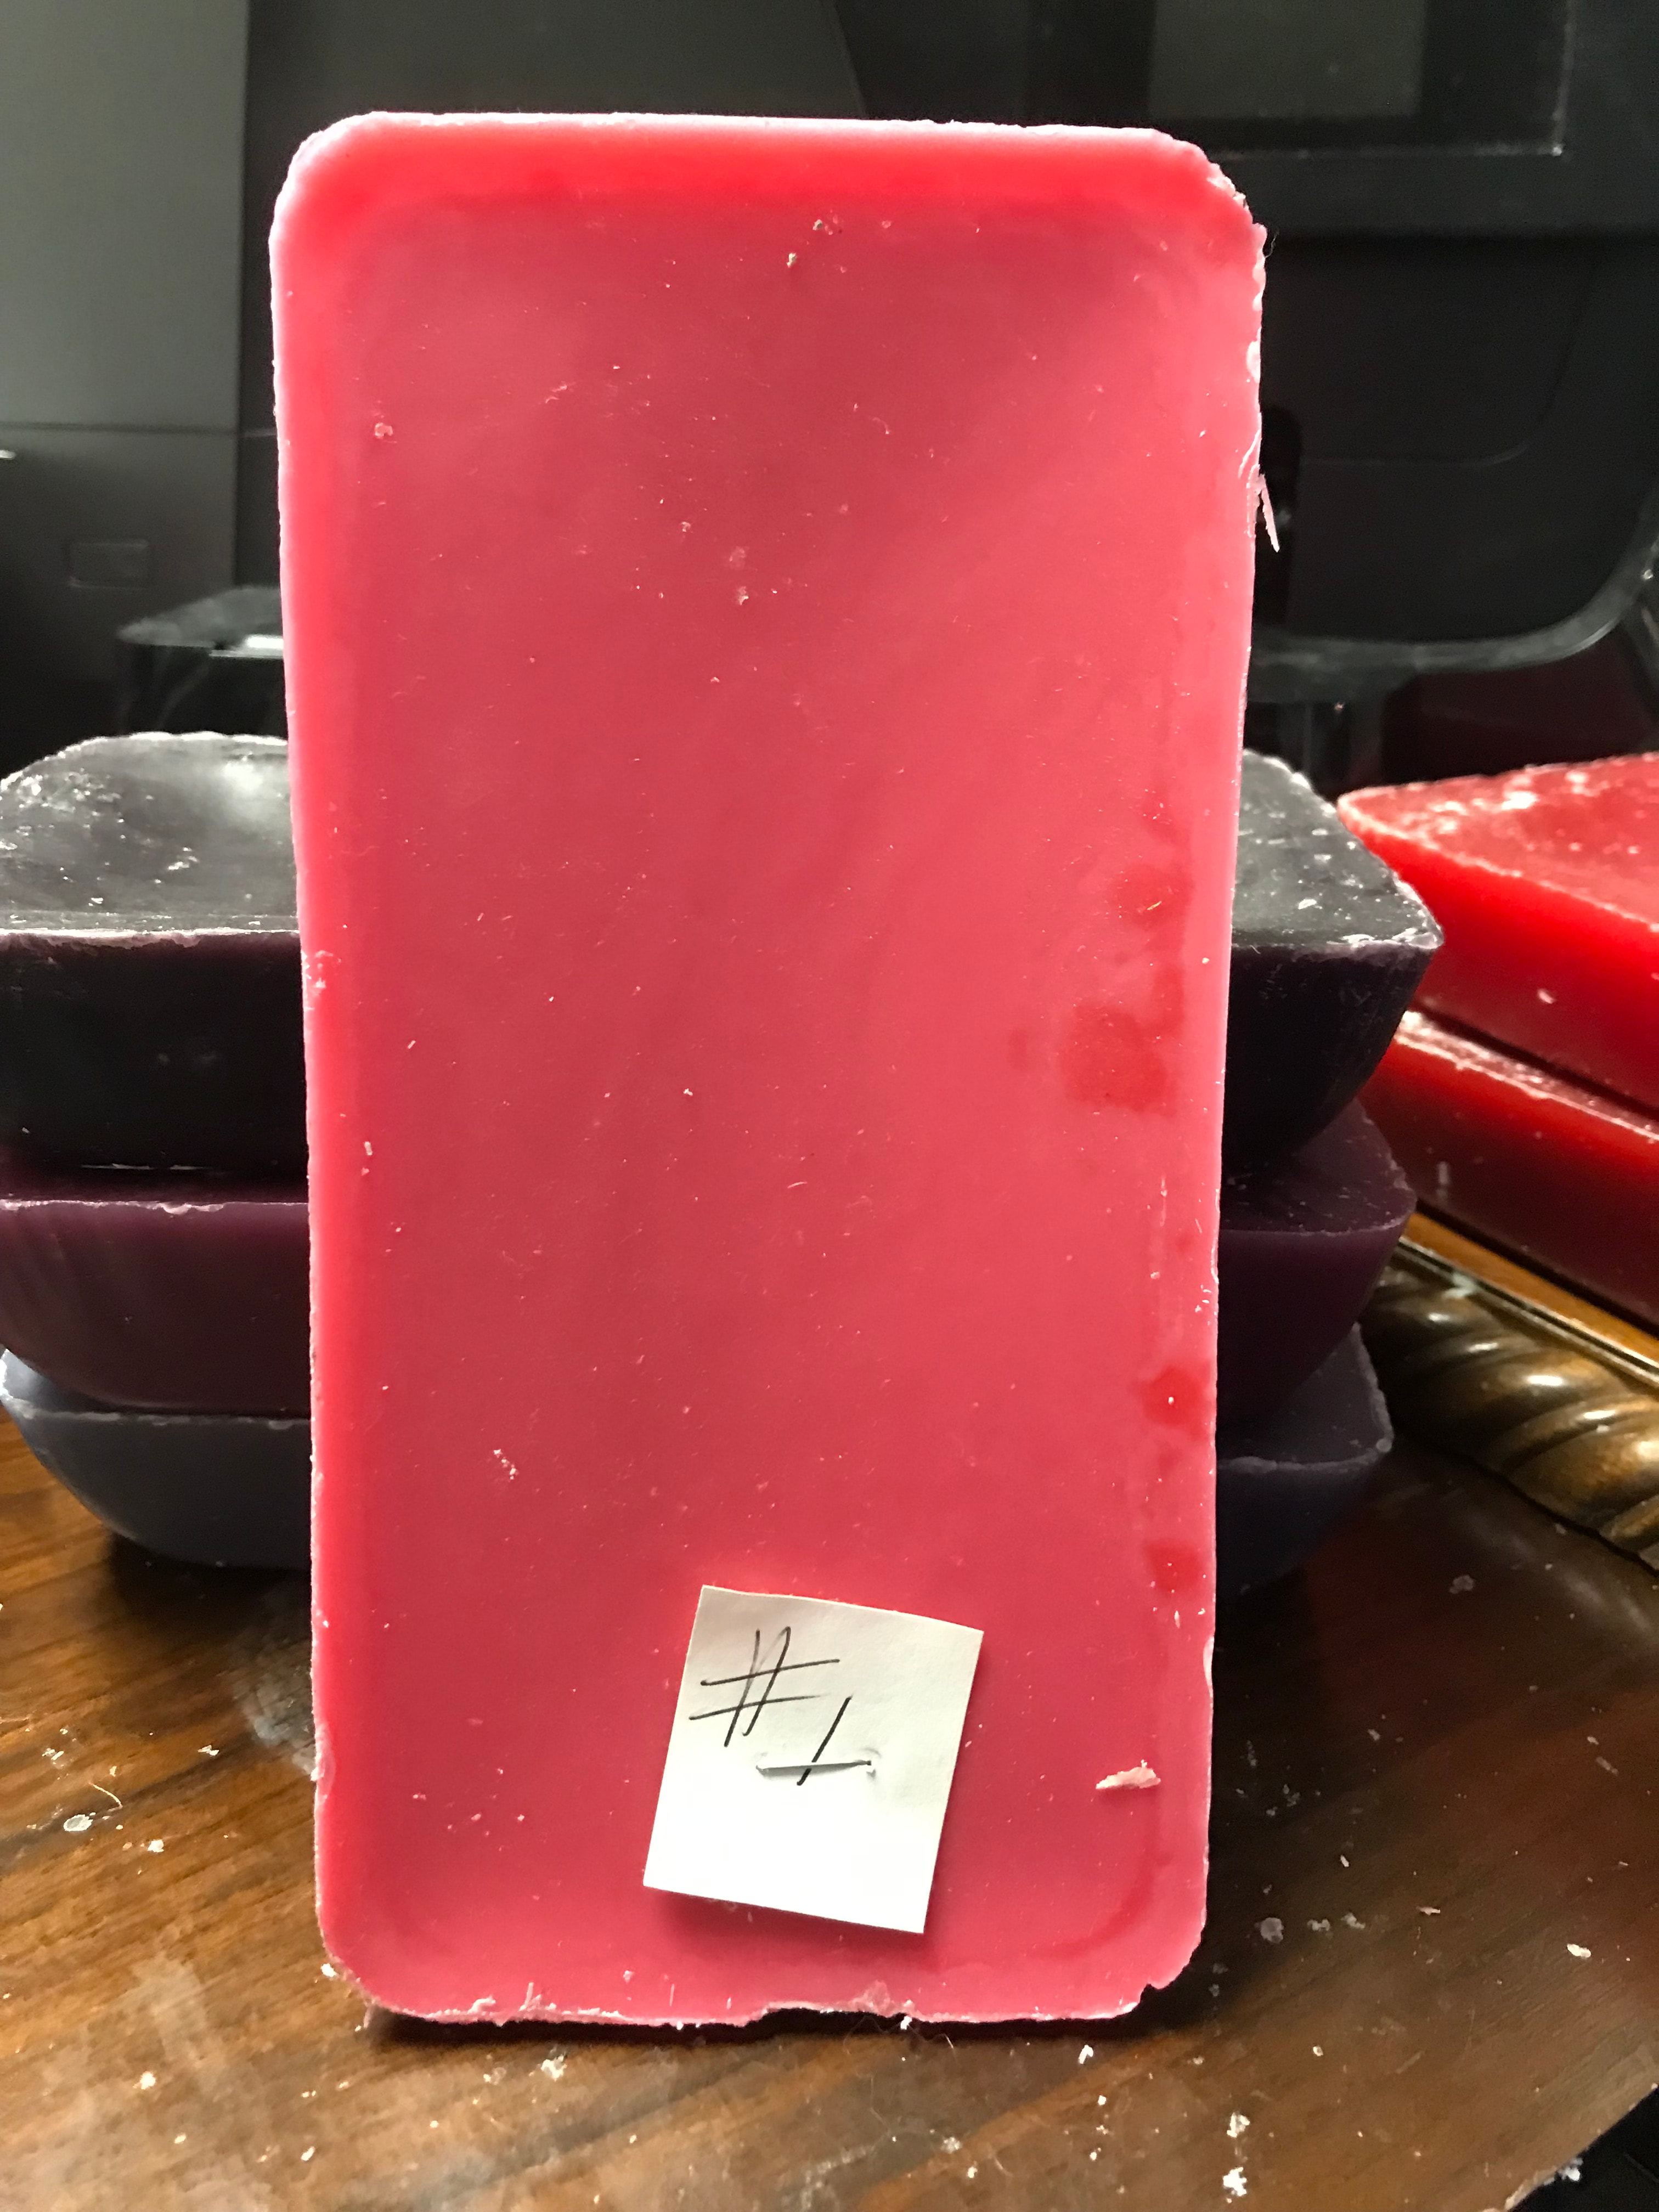 Red paraffin 1 lb block wax